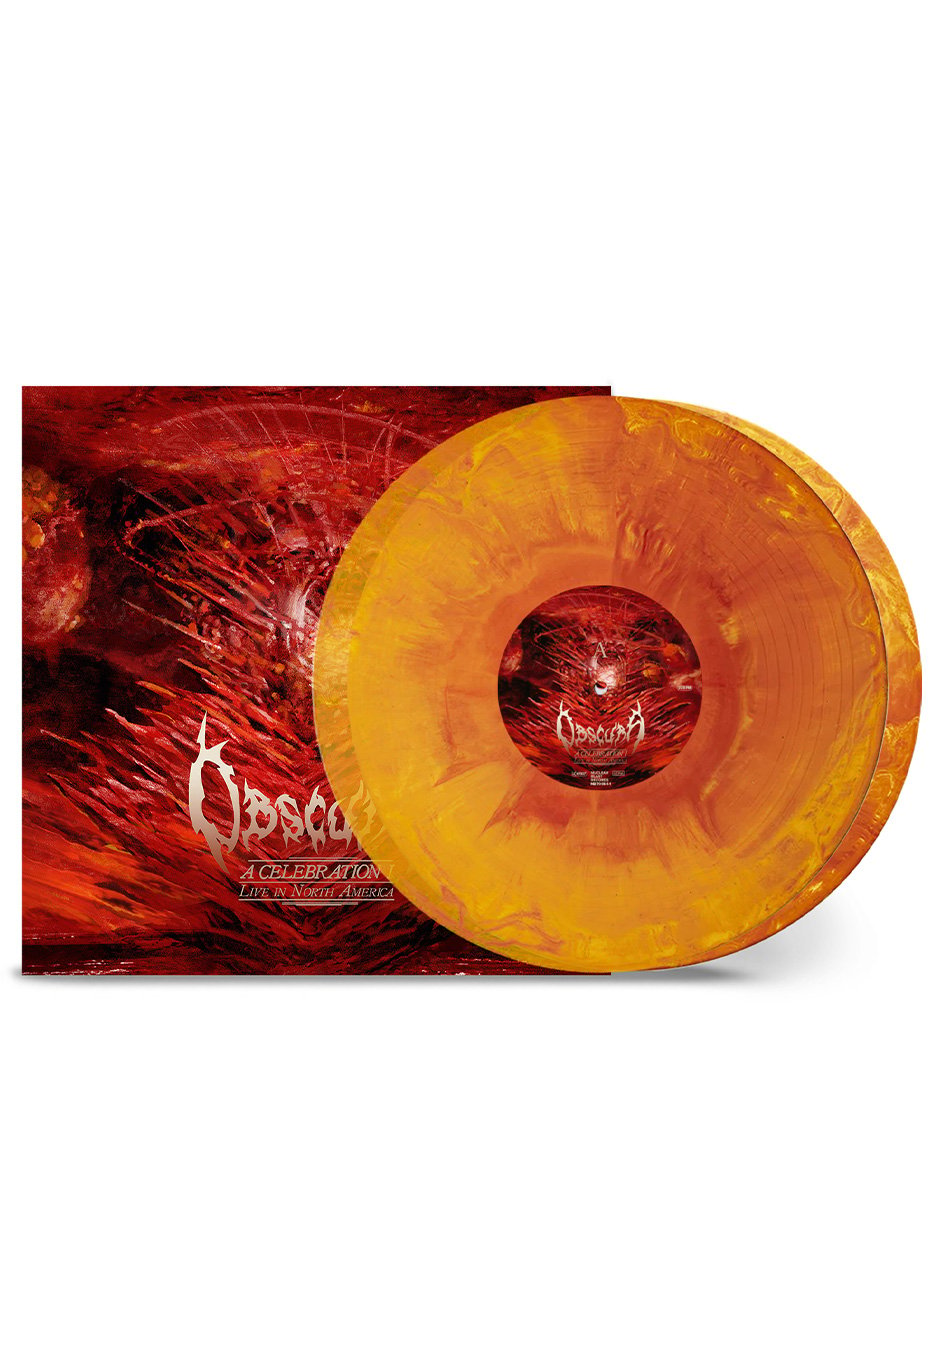 Obscura - A Celebration I - Live In North America Ltd. - Marbled 2 Vinyl